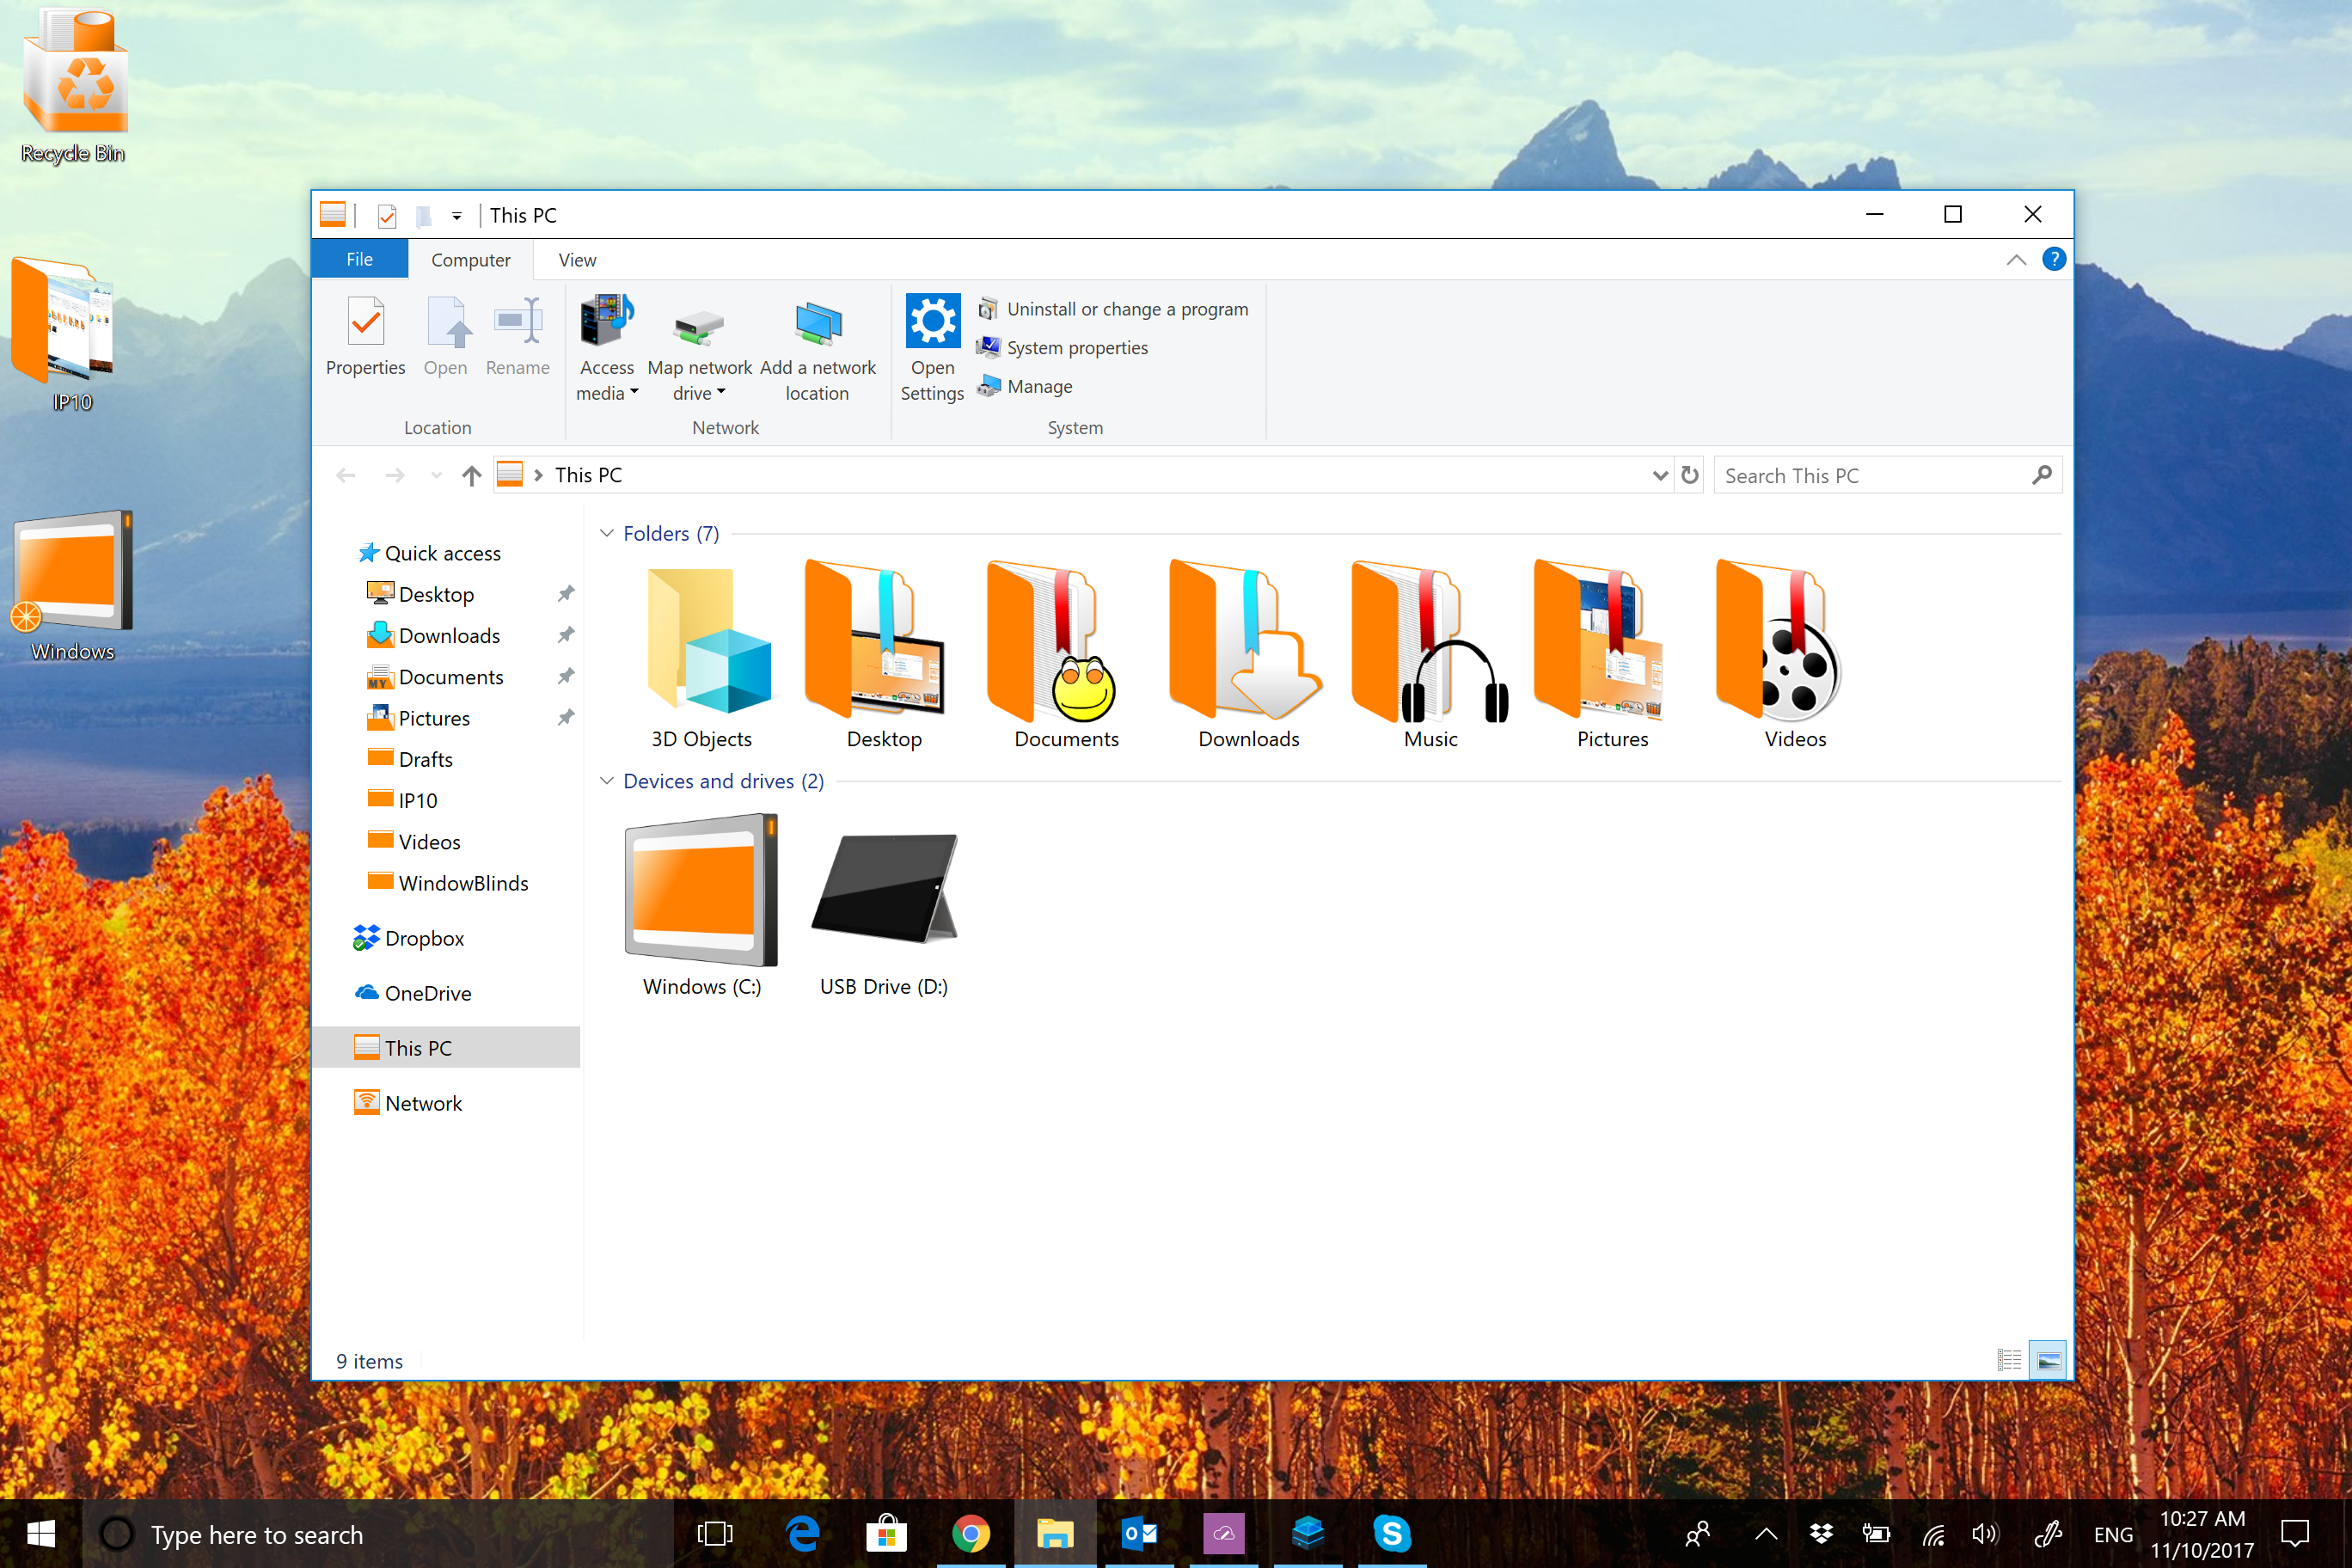 windows 10 icon pack free